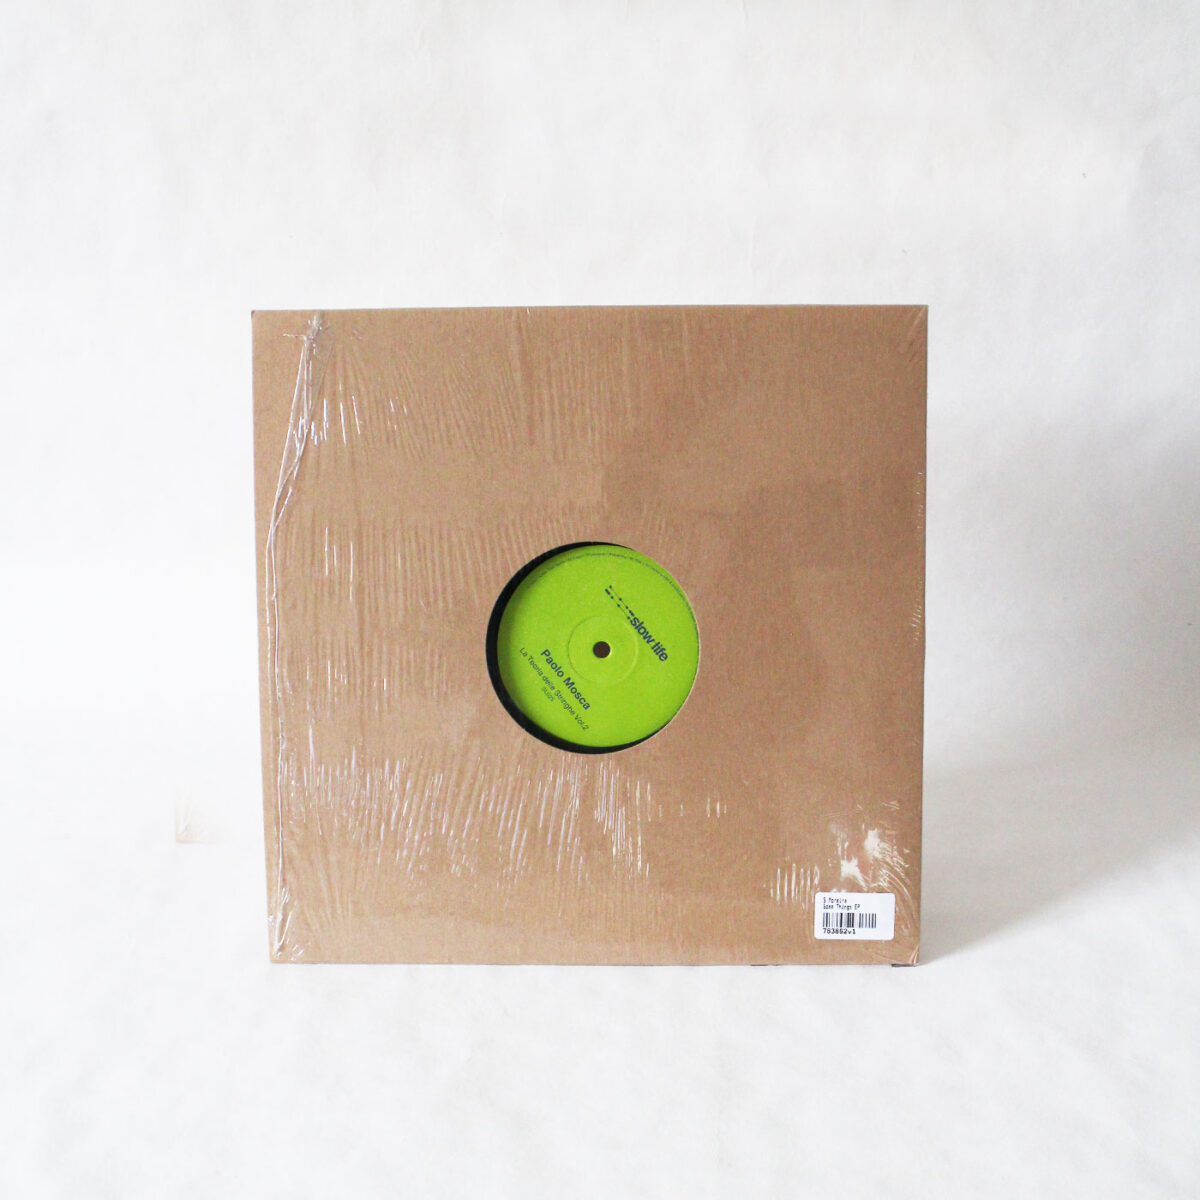 Paolo Mosca - La Teoria Delle Stringhe Vol. 2 (Vinyl Second Hand) Slow Life – SL025 Deep House Minimal House